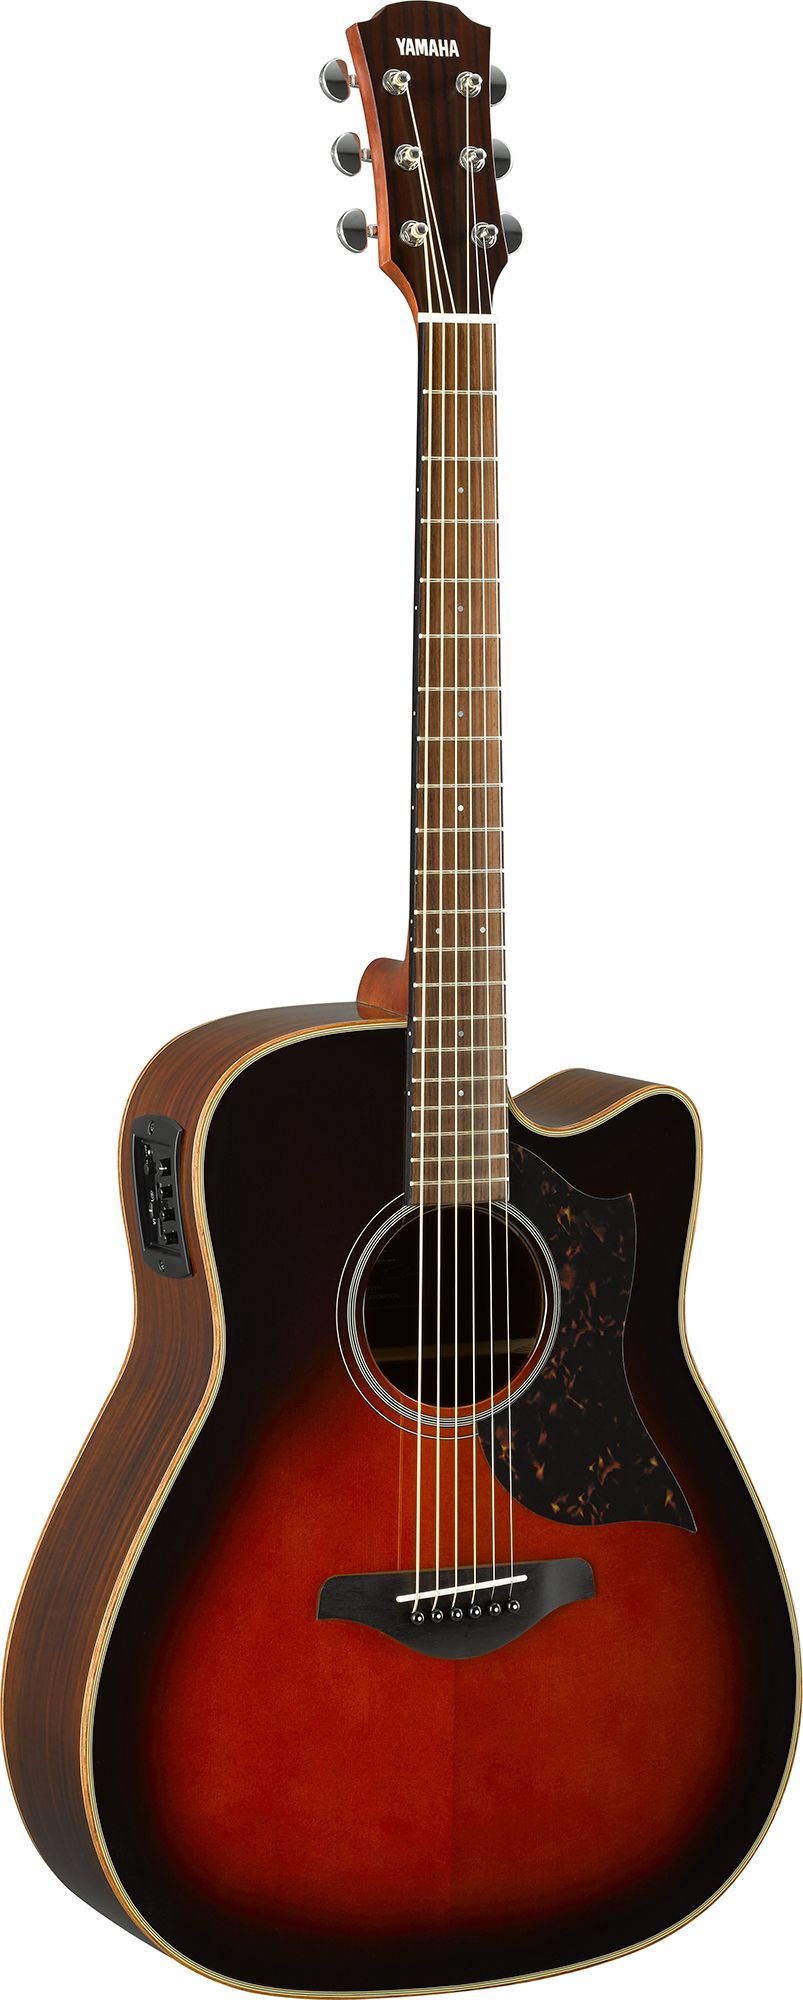 A Series - A1 - Acoustic Guitars - Guitars, Basses & Amps 